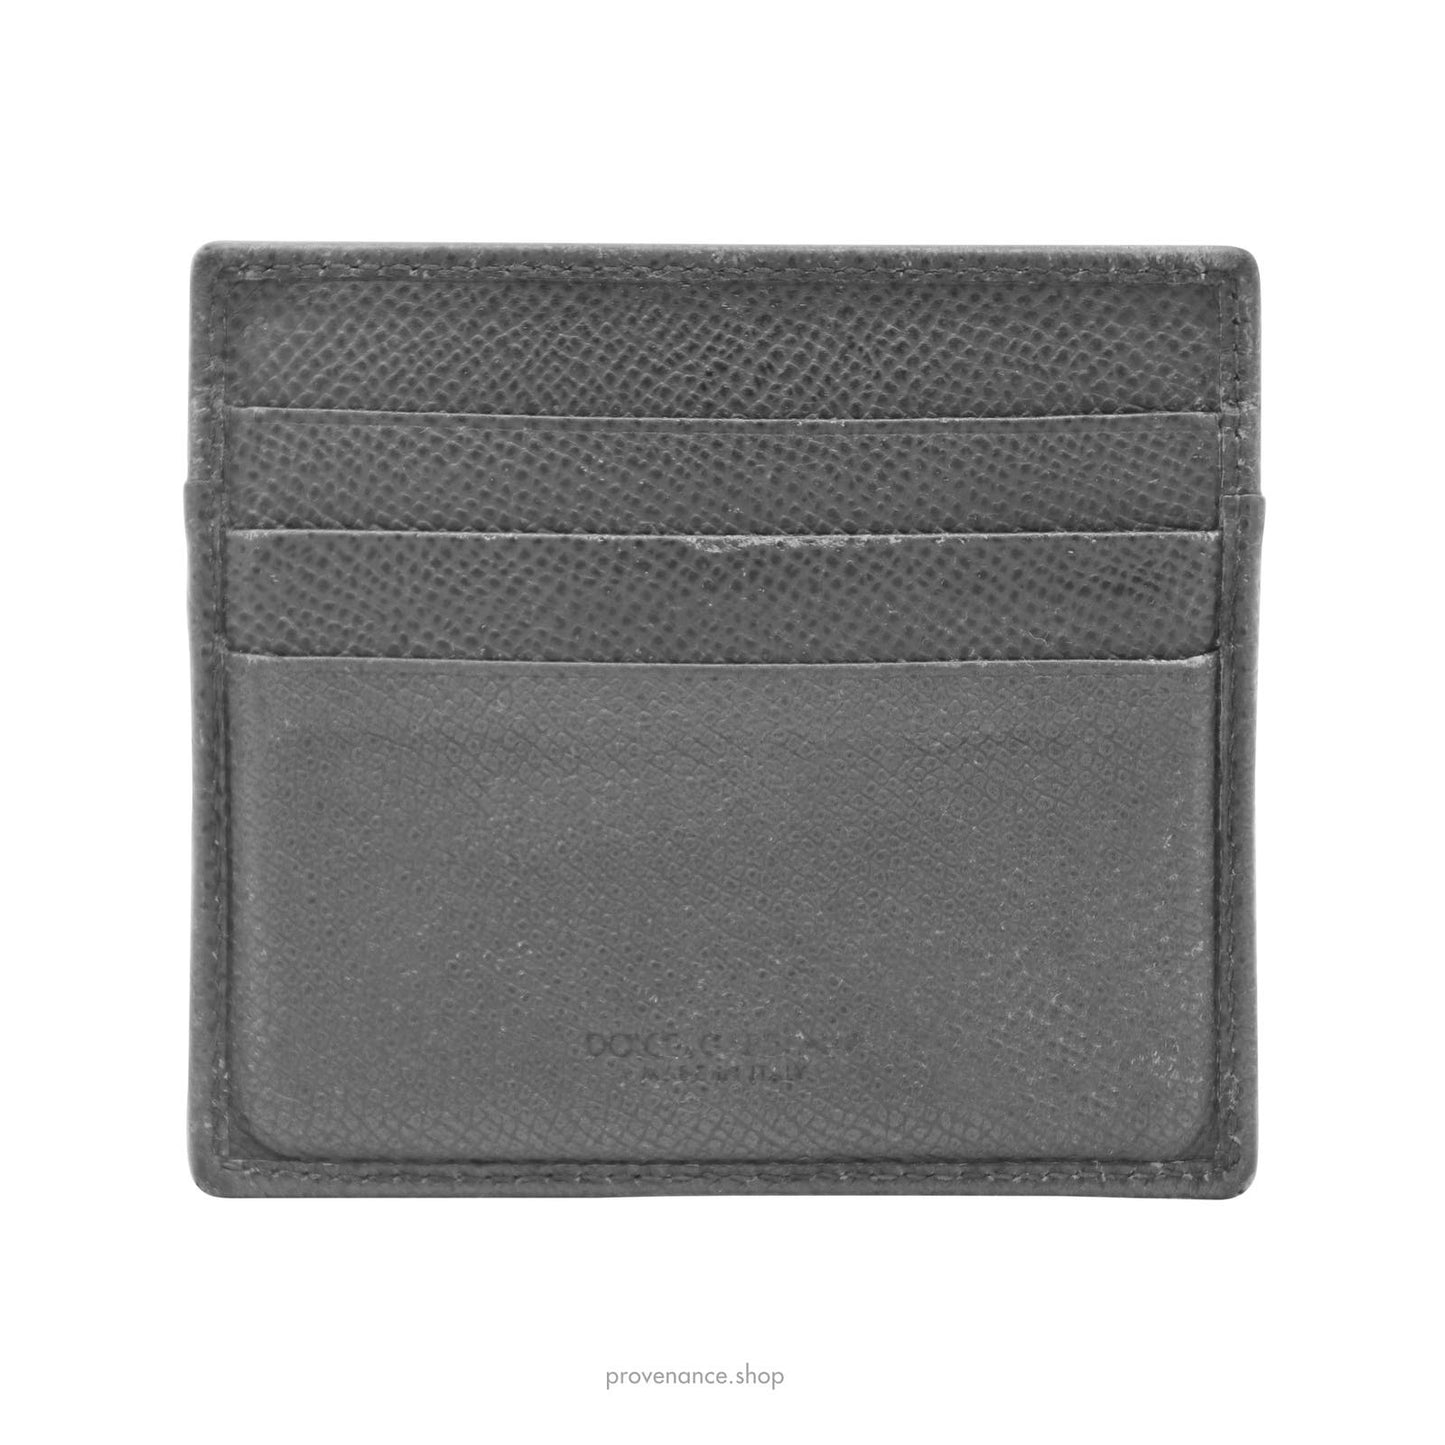 🔴 Dolce & Gabbana Card Holder Wallet - Gray